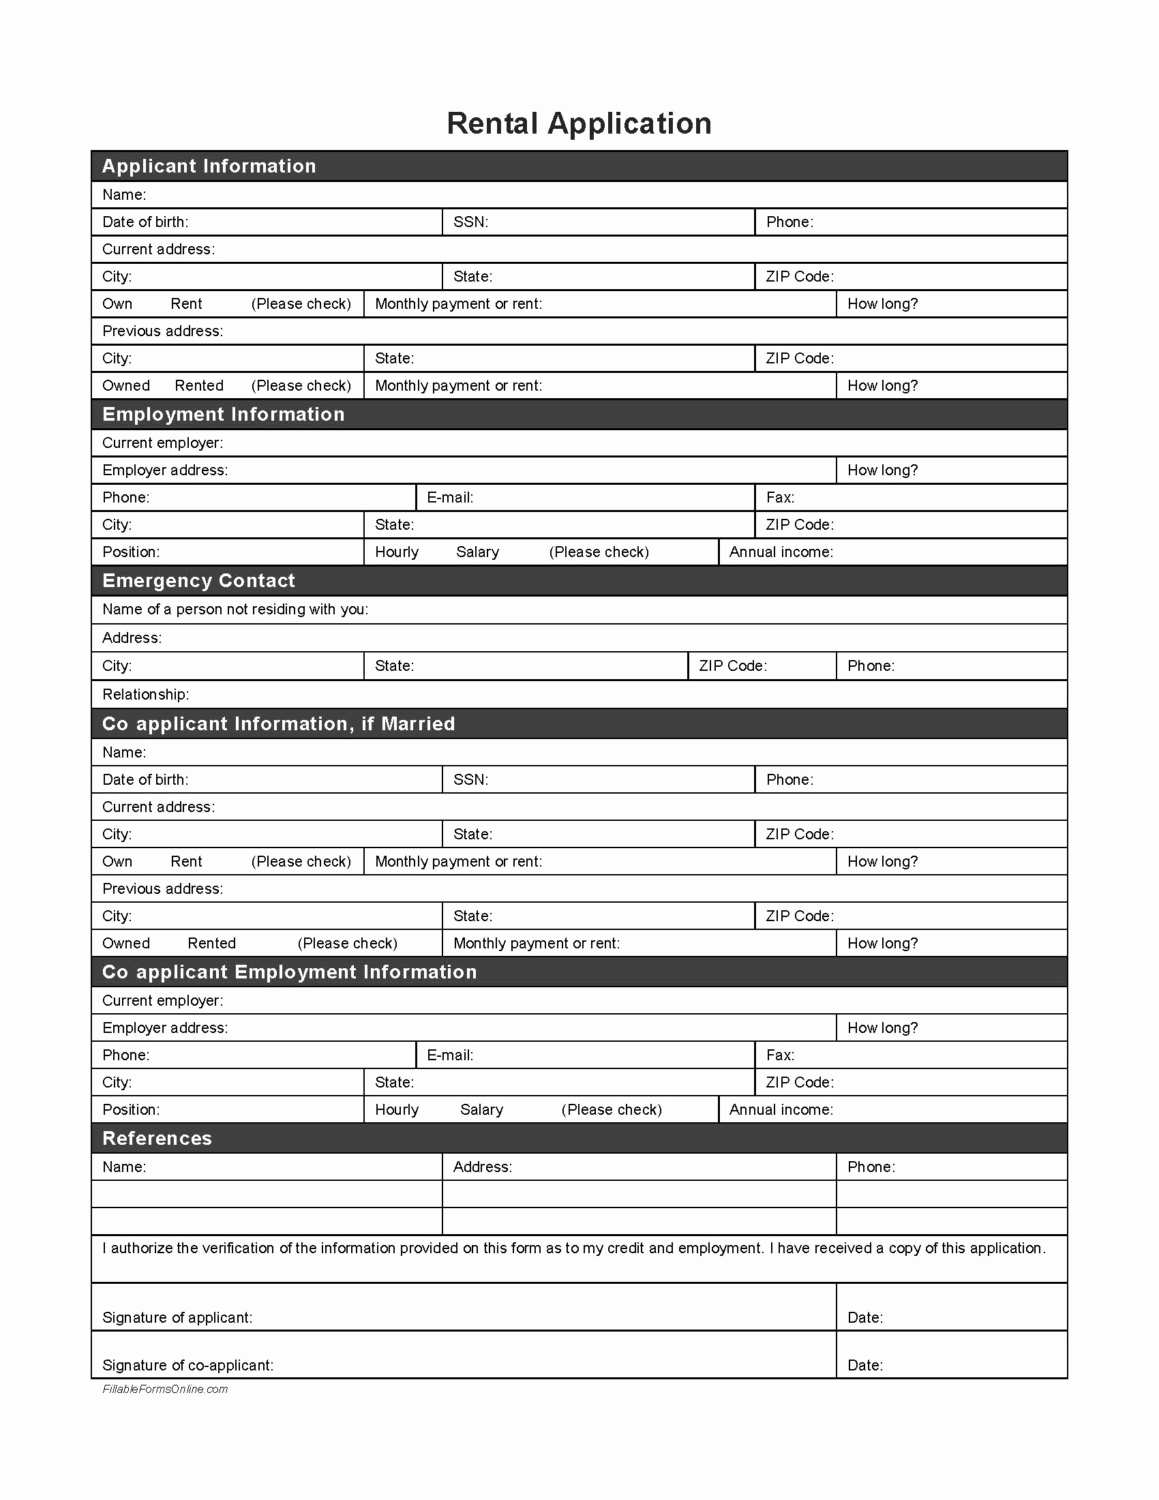 Rental Application form Pdf Unique Pdf Type Fillable Rental Application